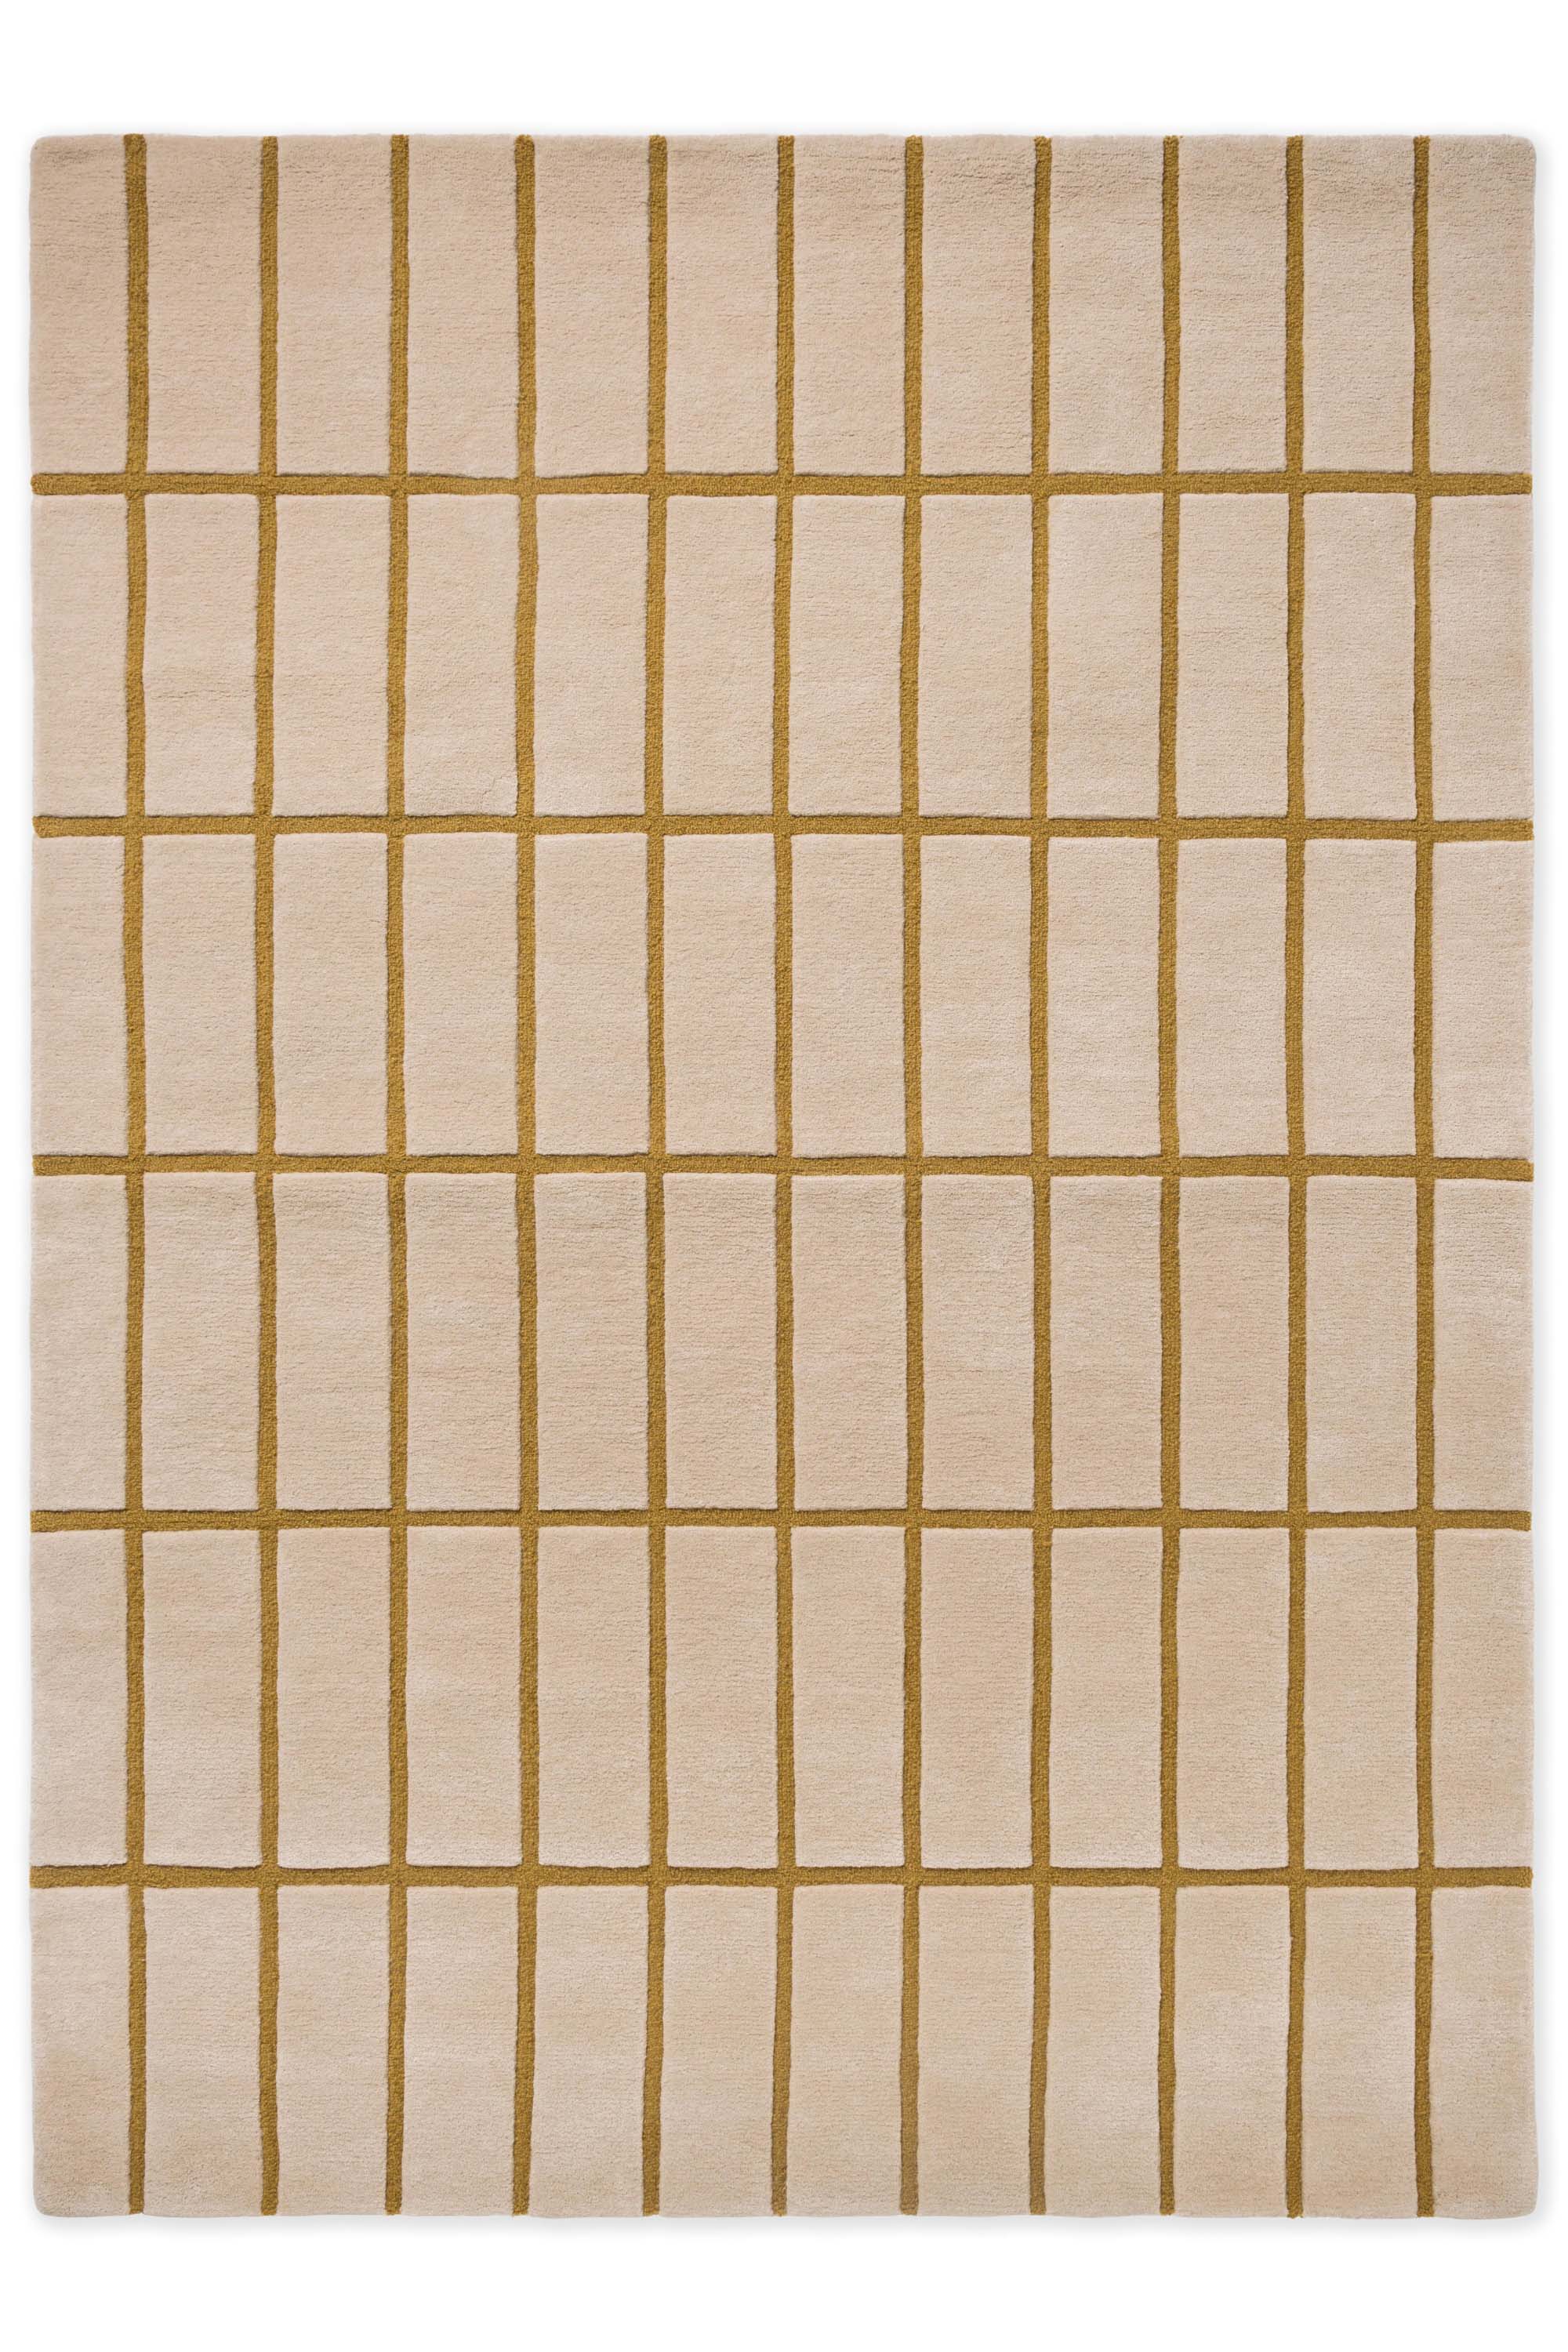 Geometric rug with blue grid pattern